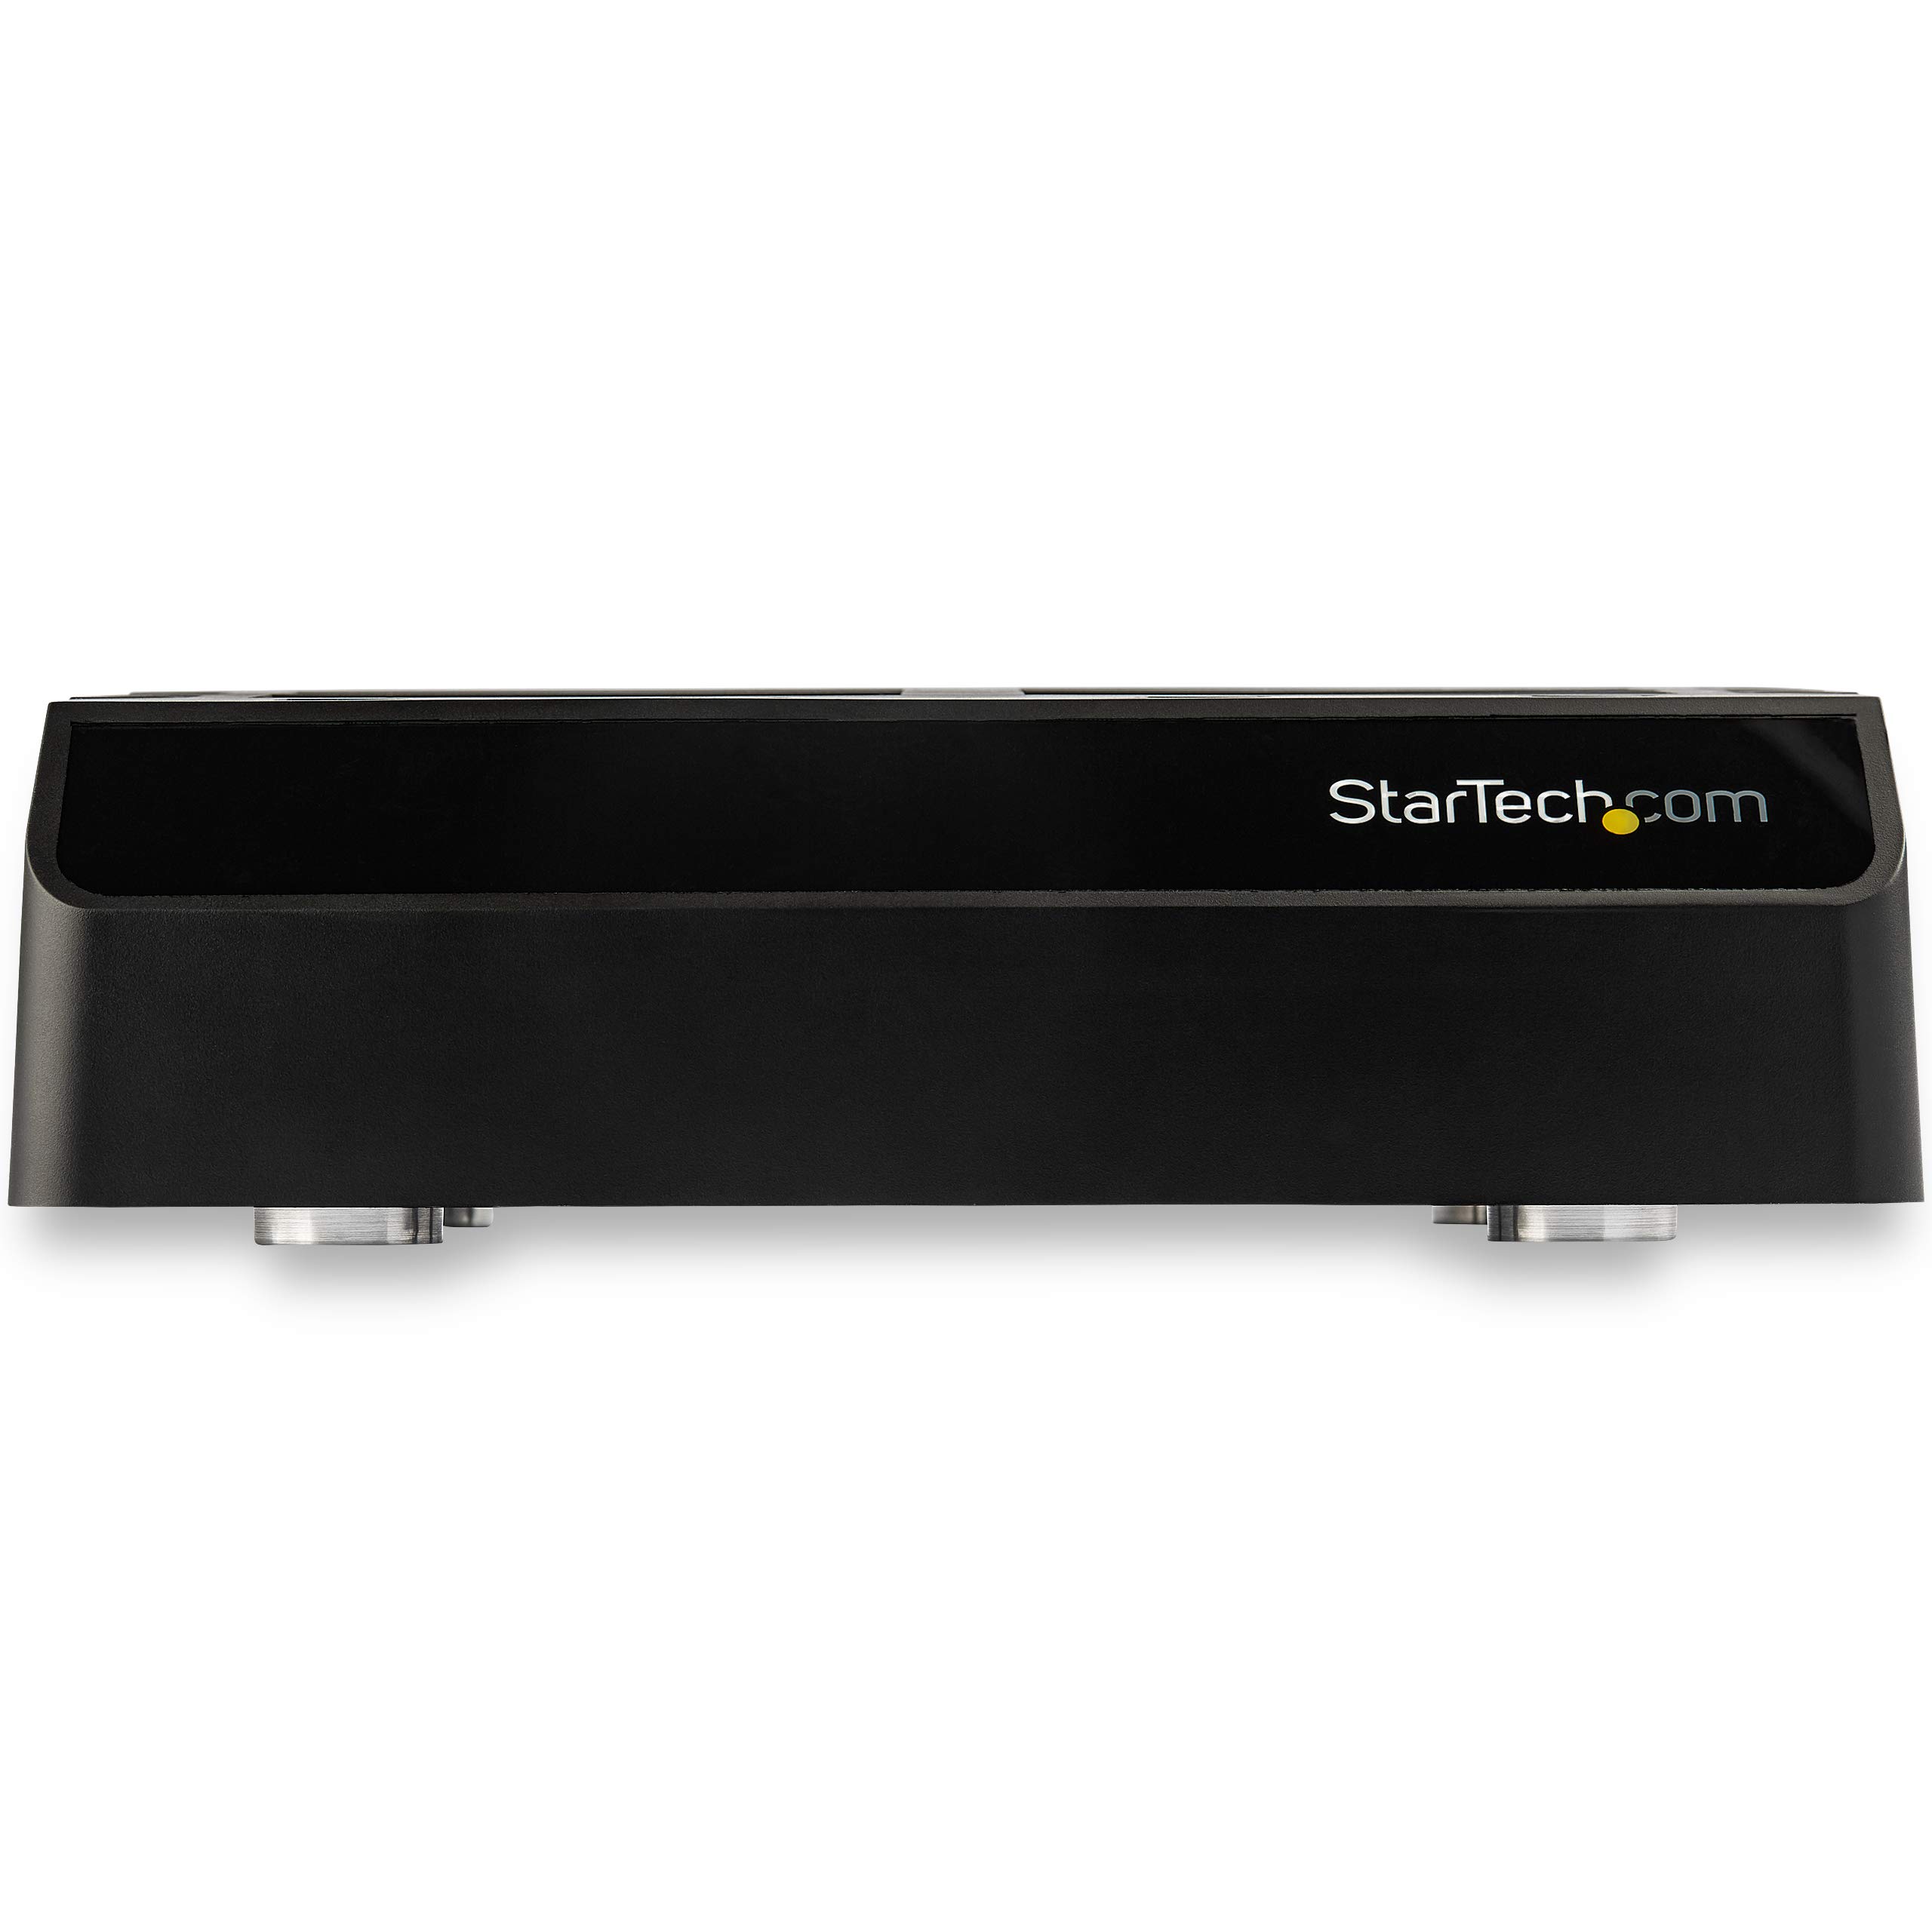 StarTech.com 4-Bay USB 3.1 to SATA Hard Drive Docking Station, 10Gbps USB Hard Drive Dock, External 2.5/3.5